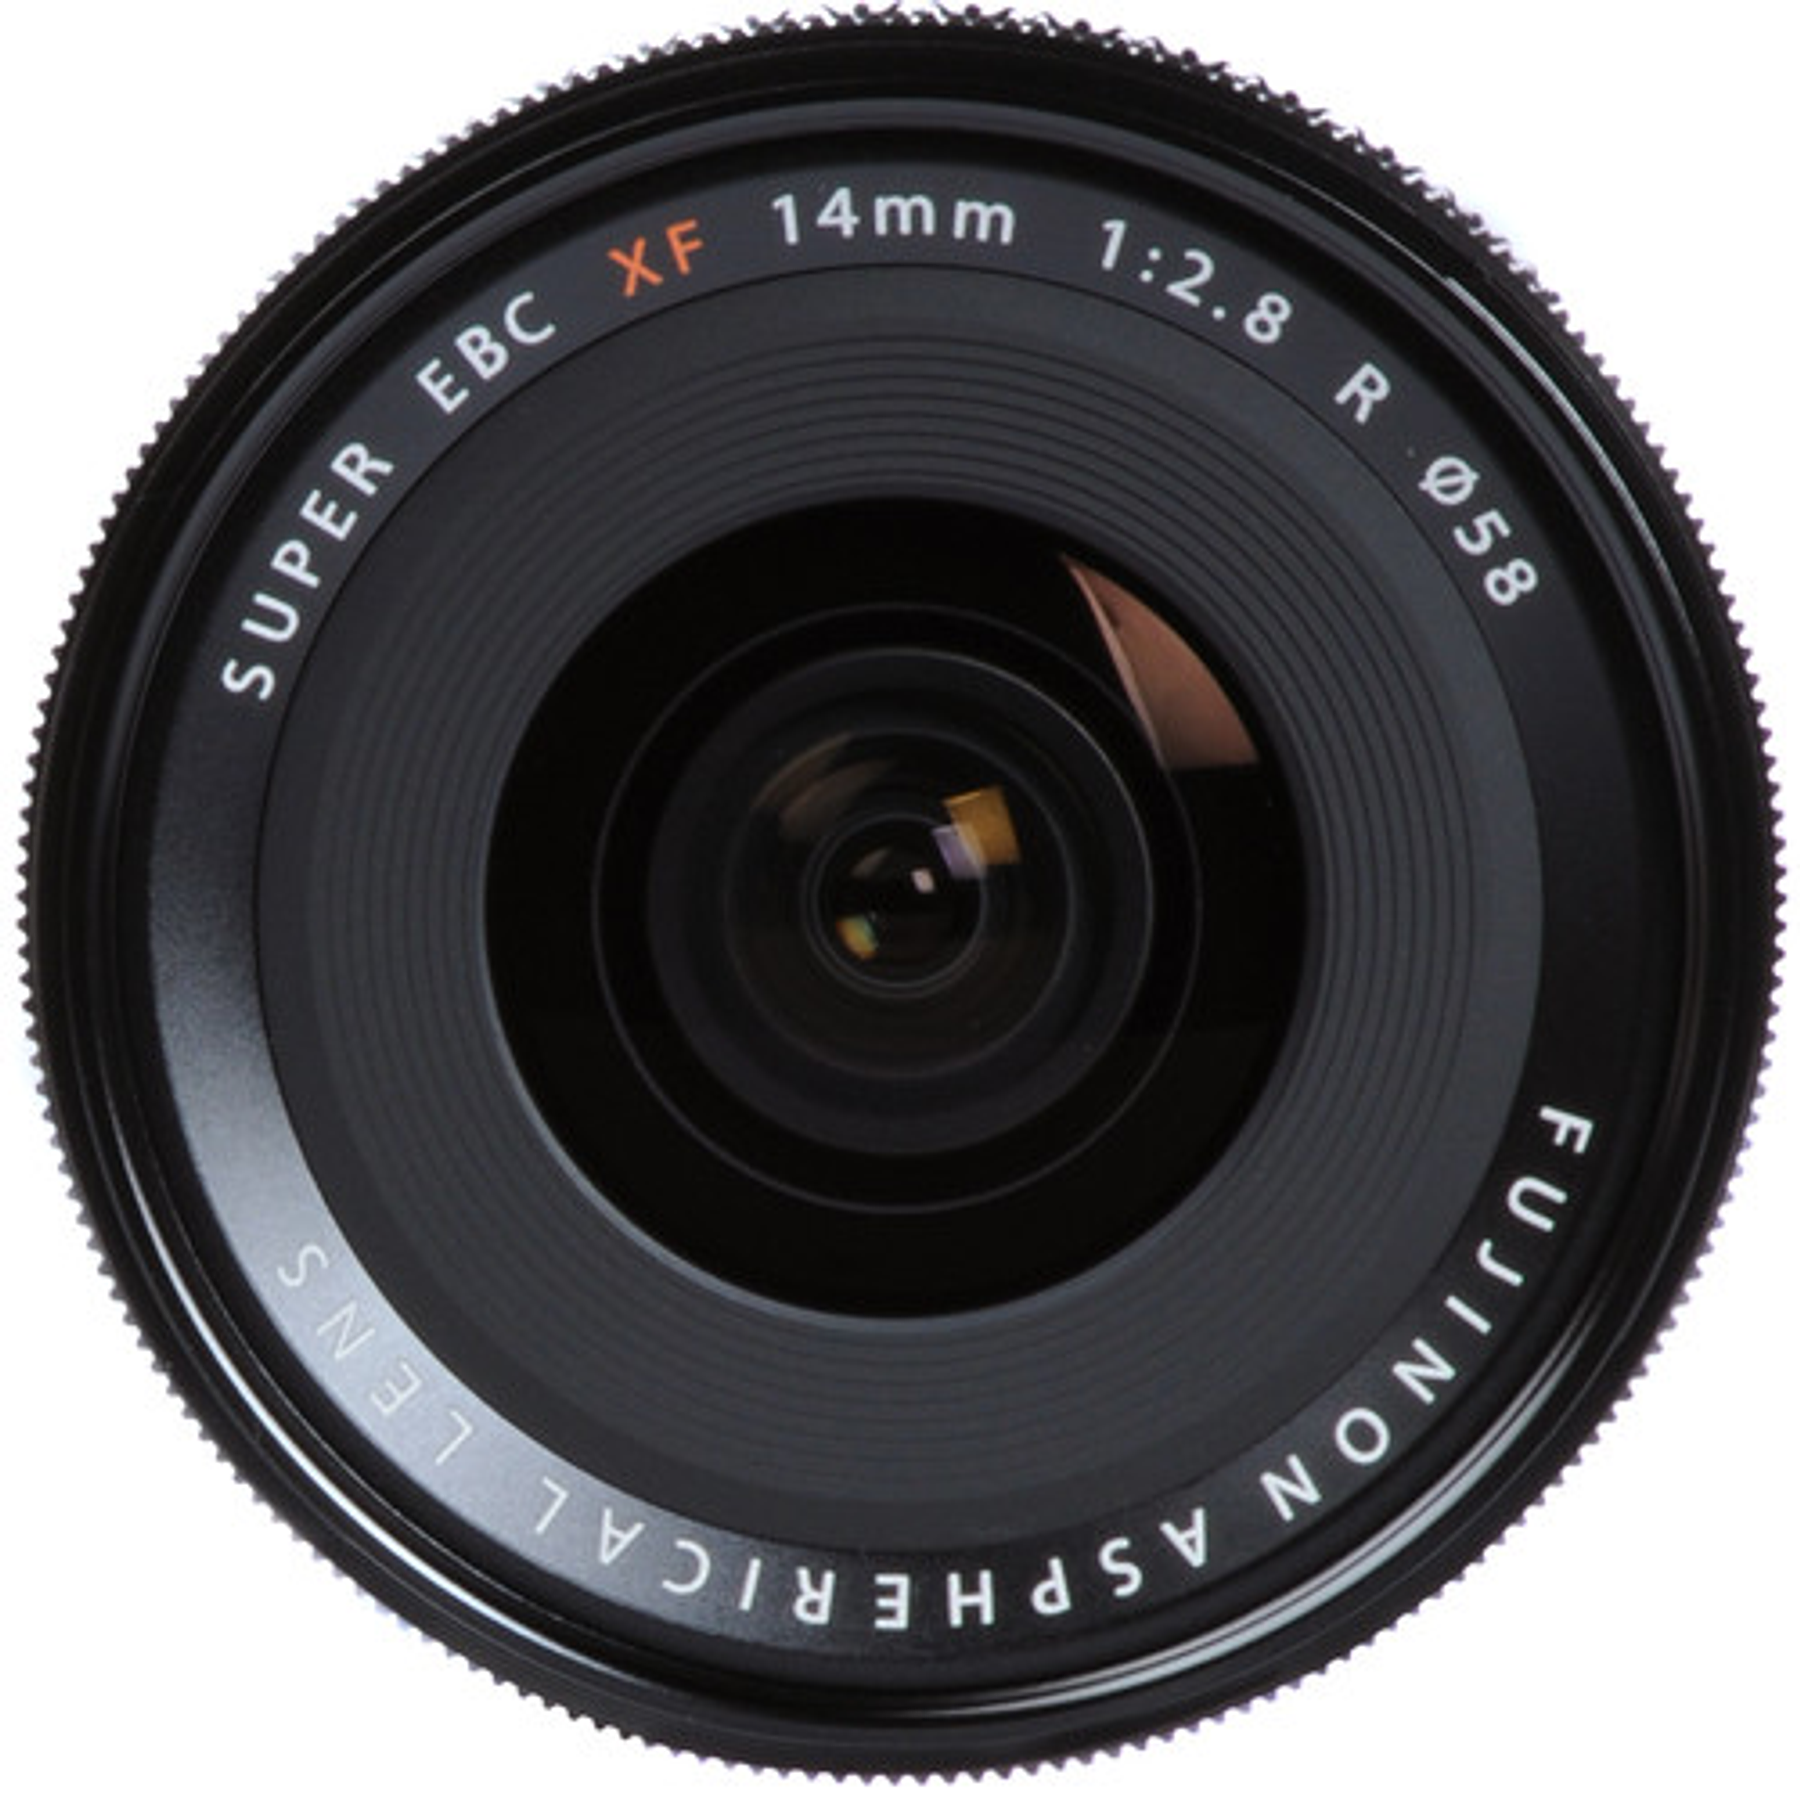 Fujifilm XF 14mm f2.8 R